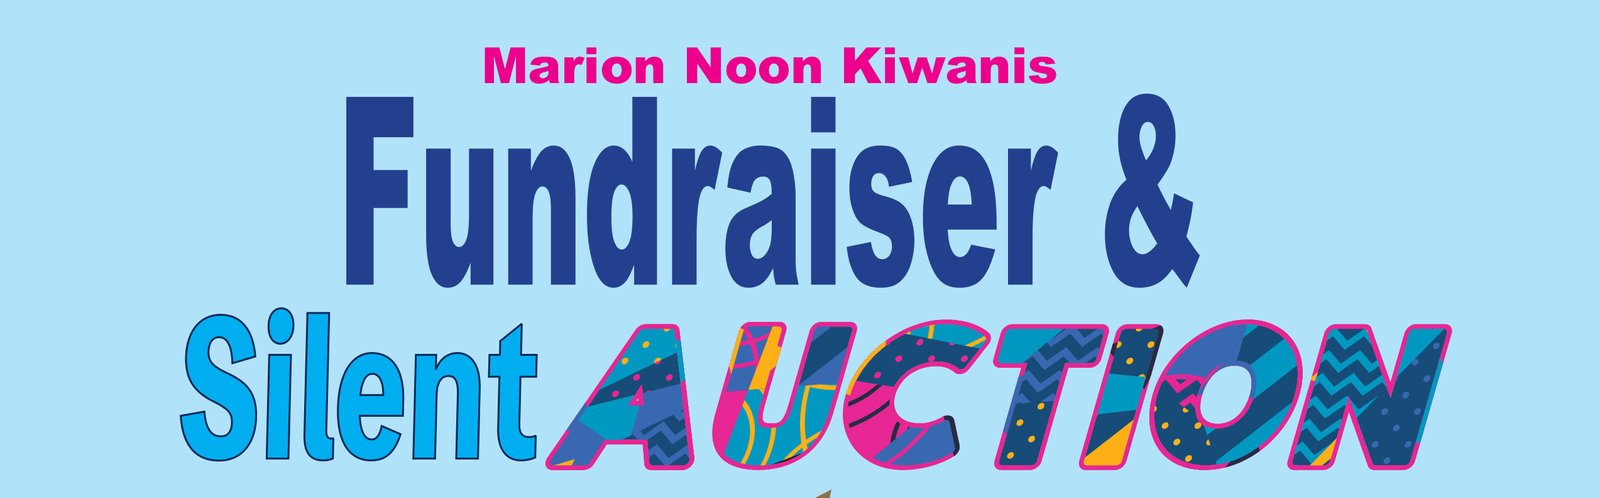 Kiwanis Fundraiser & Silent Auction